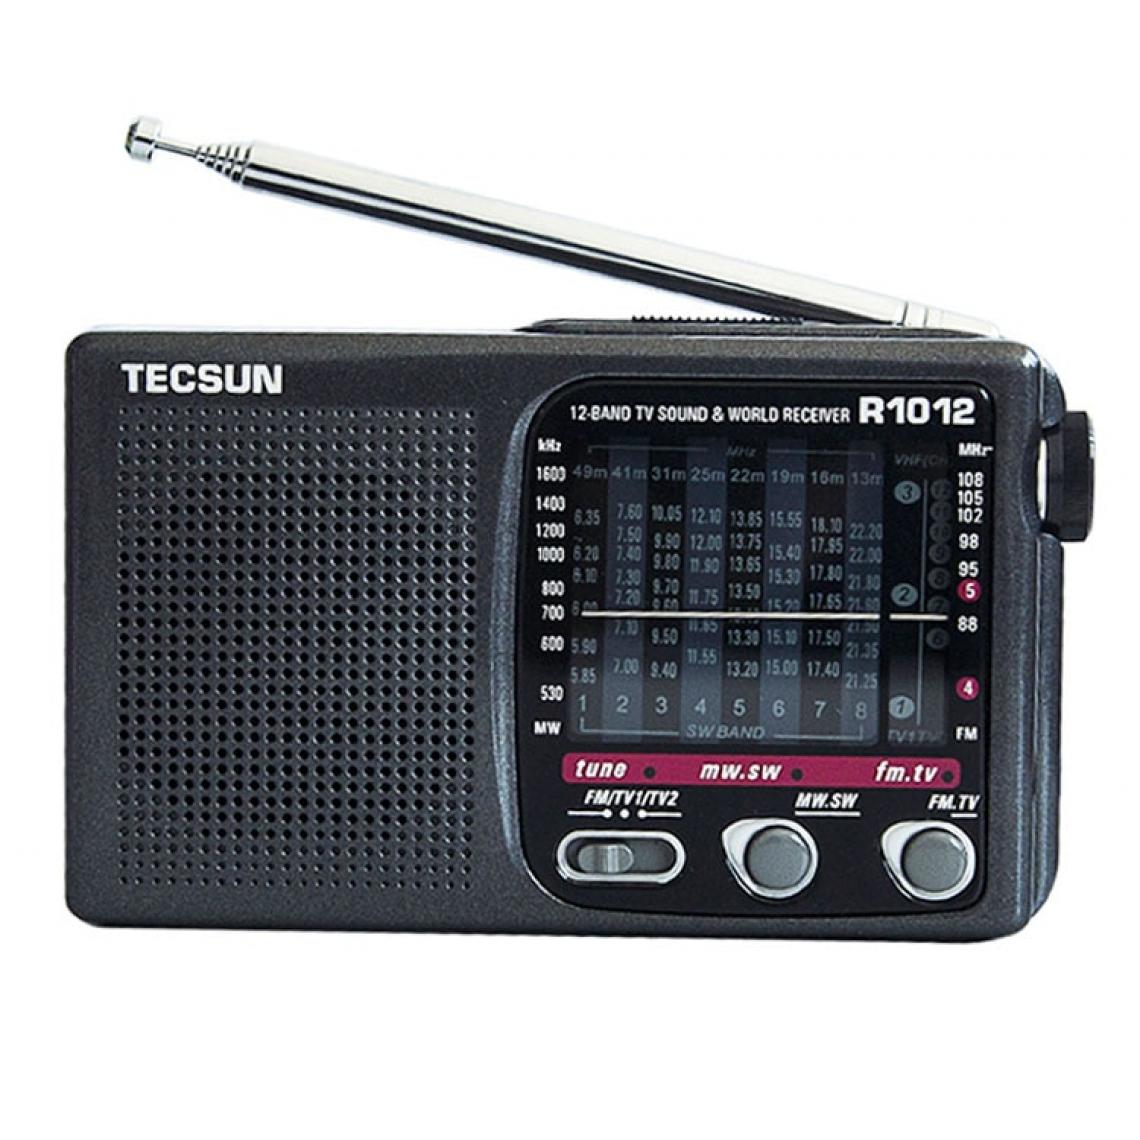 Universal - Radio portable FM/MW/SW/SW/TV Radio Multiband World Band Radio Receiver 76 108 MHz | Radio(Le noir) - Radio